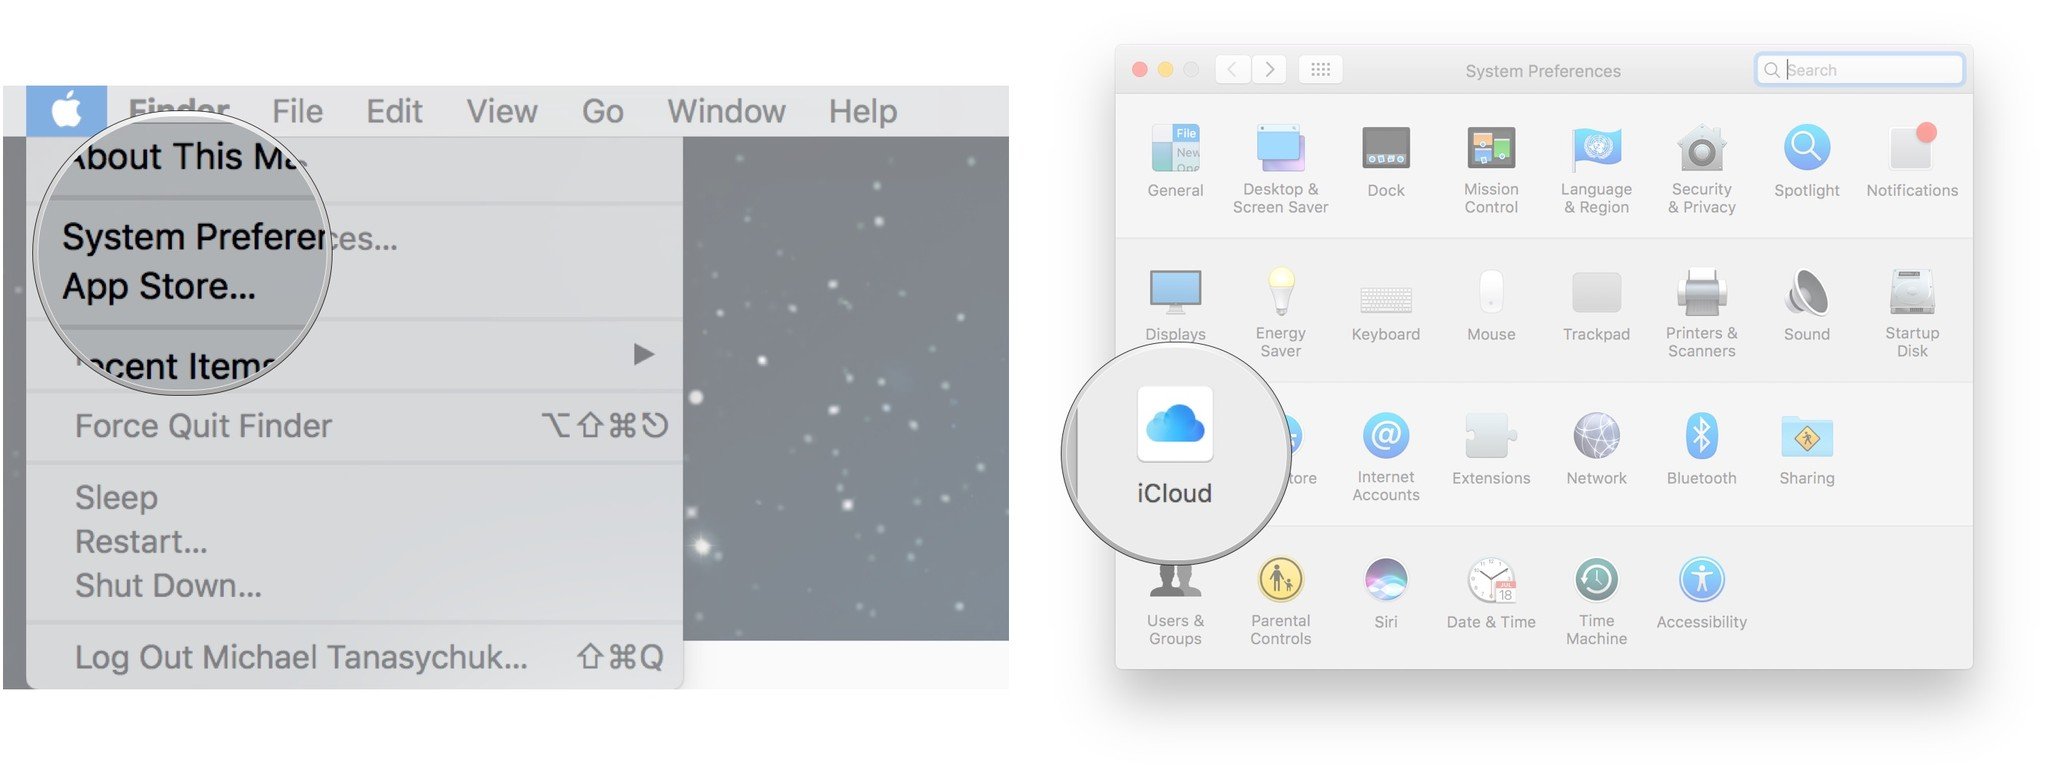 Mac App Find Large Files